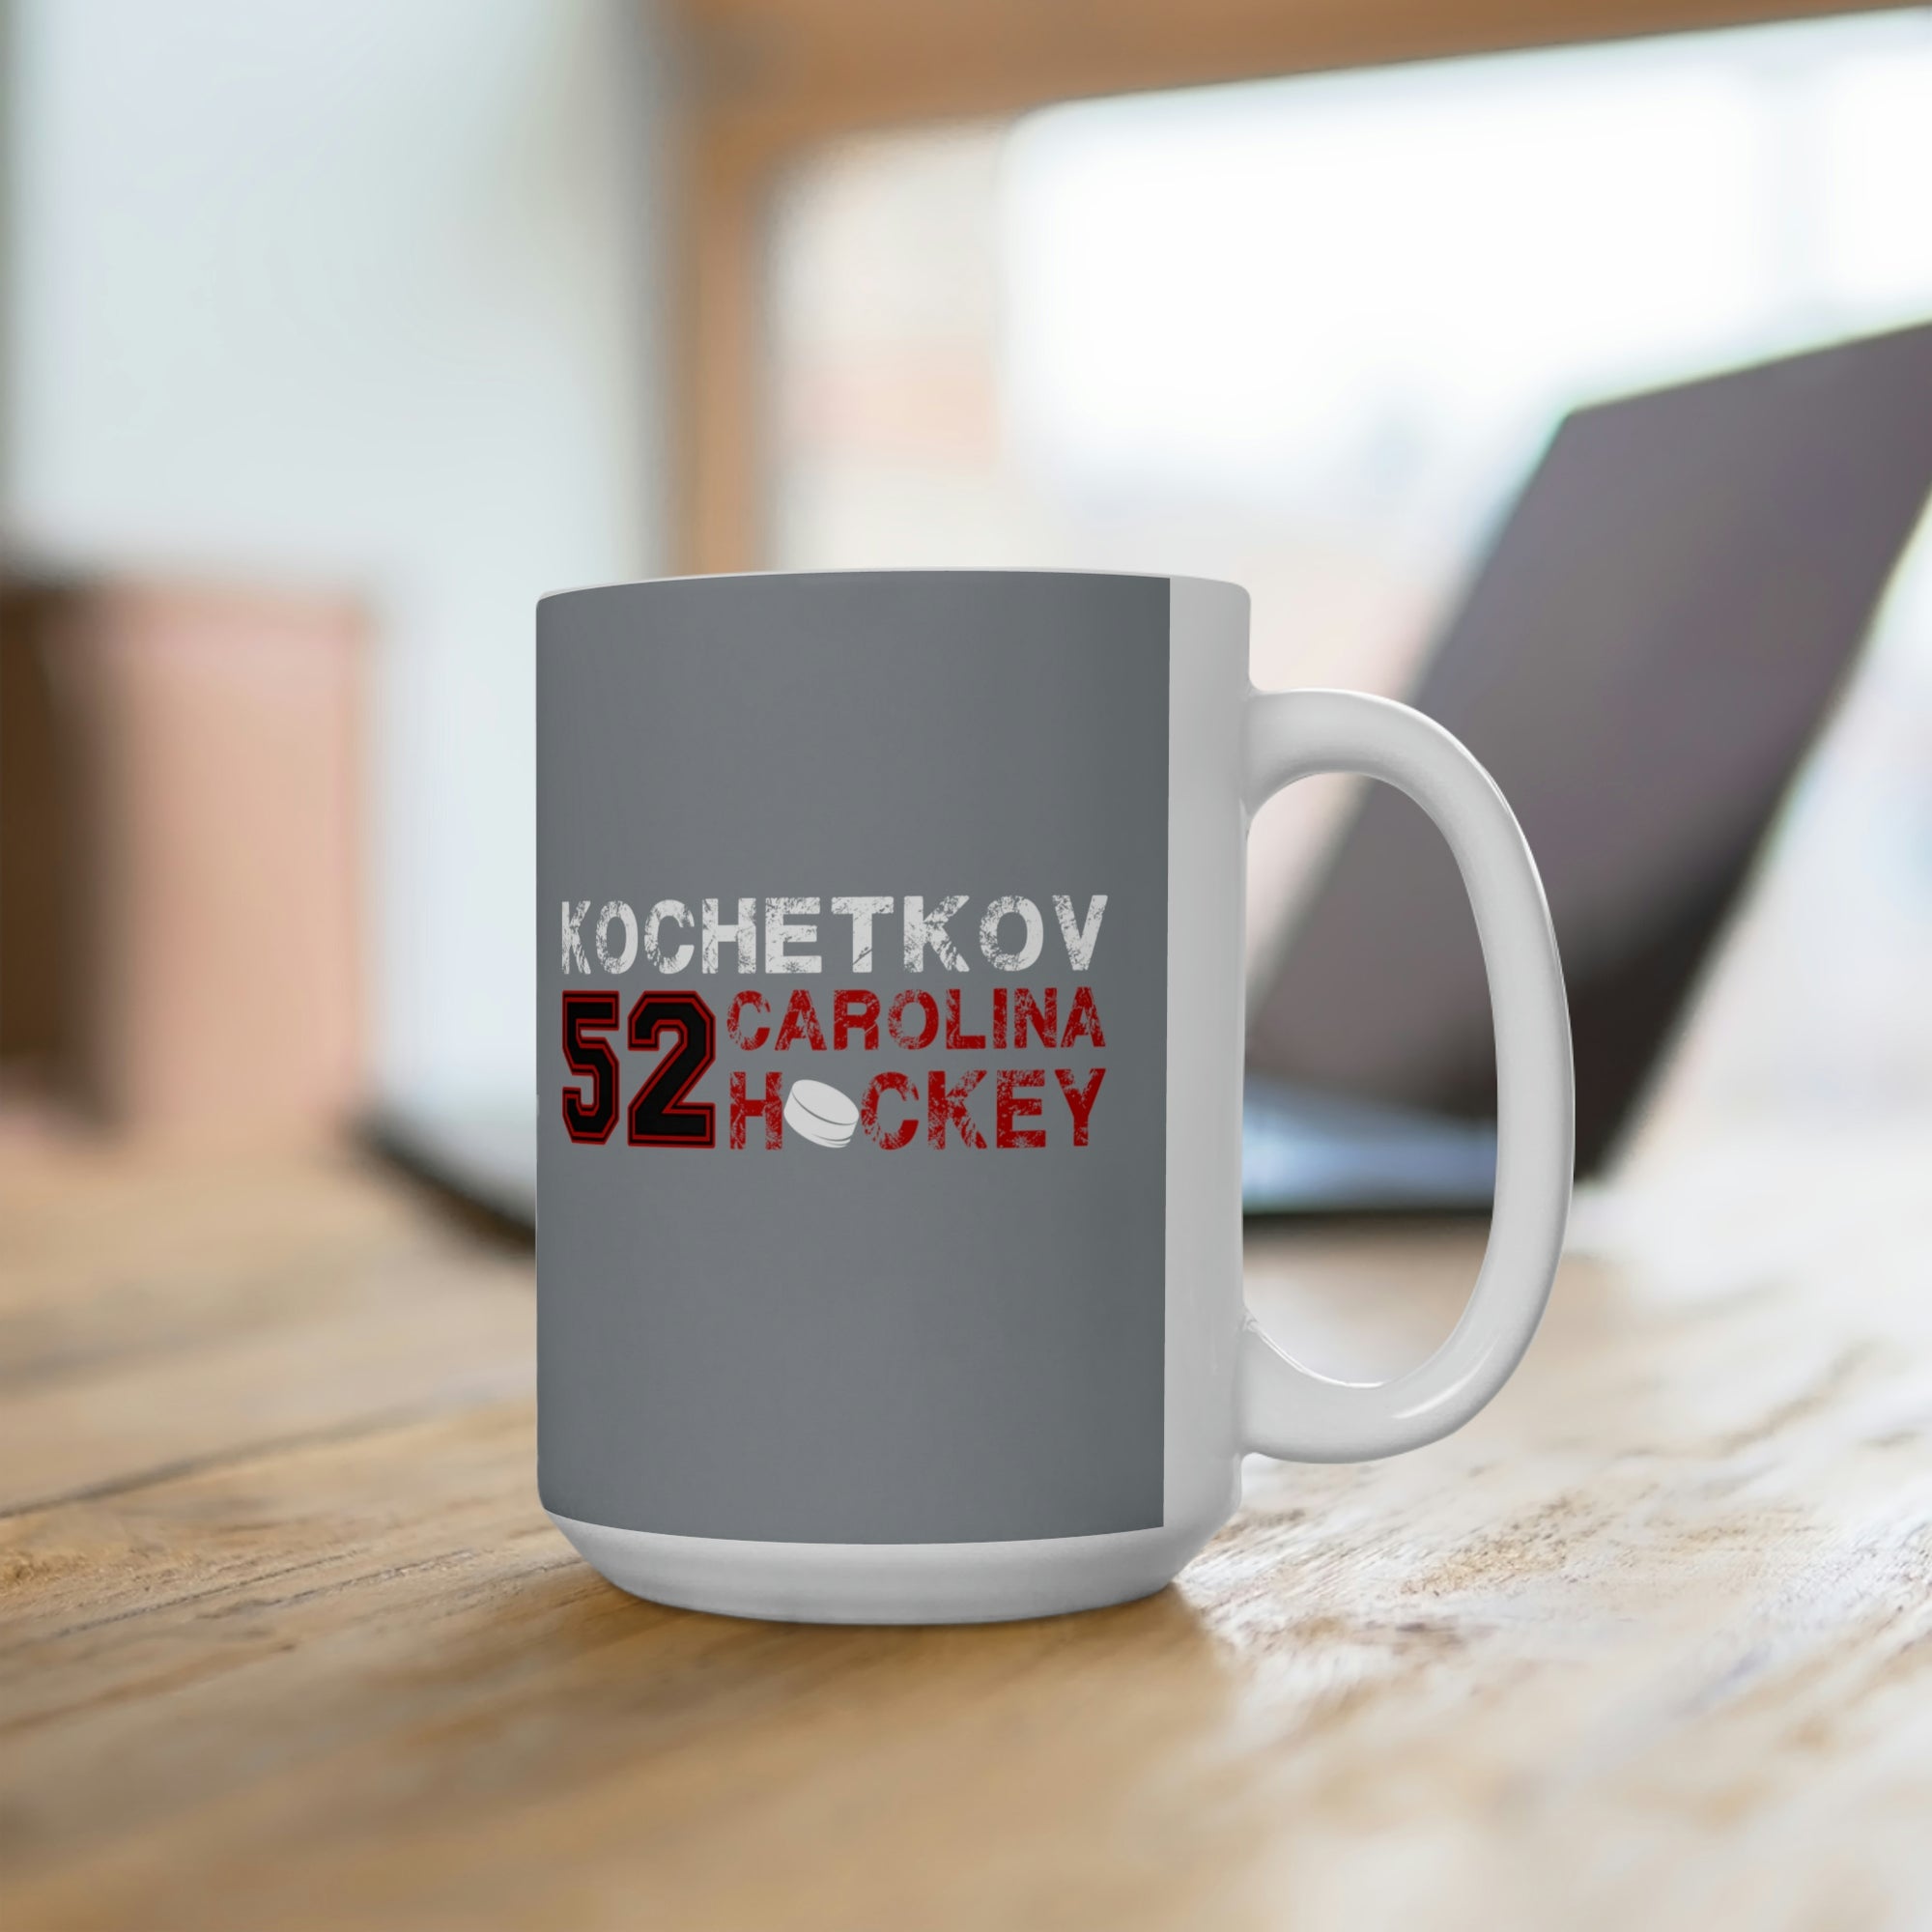 Kochetkov 52 Carolina Hockey Ceramic Coffee Mug In Gray, 15oz